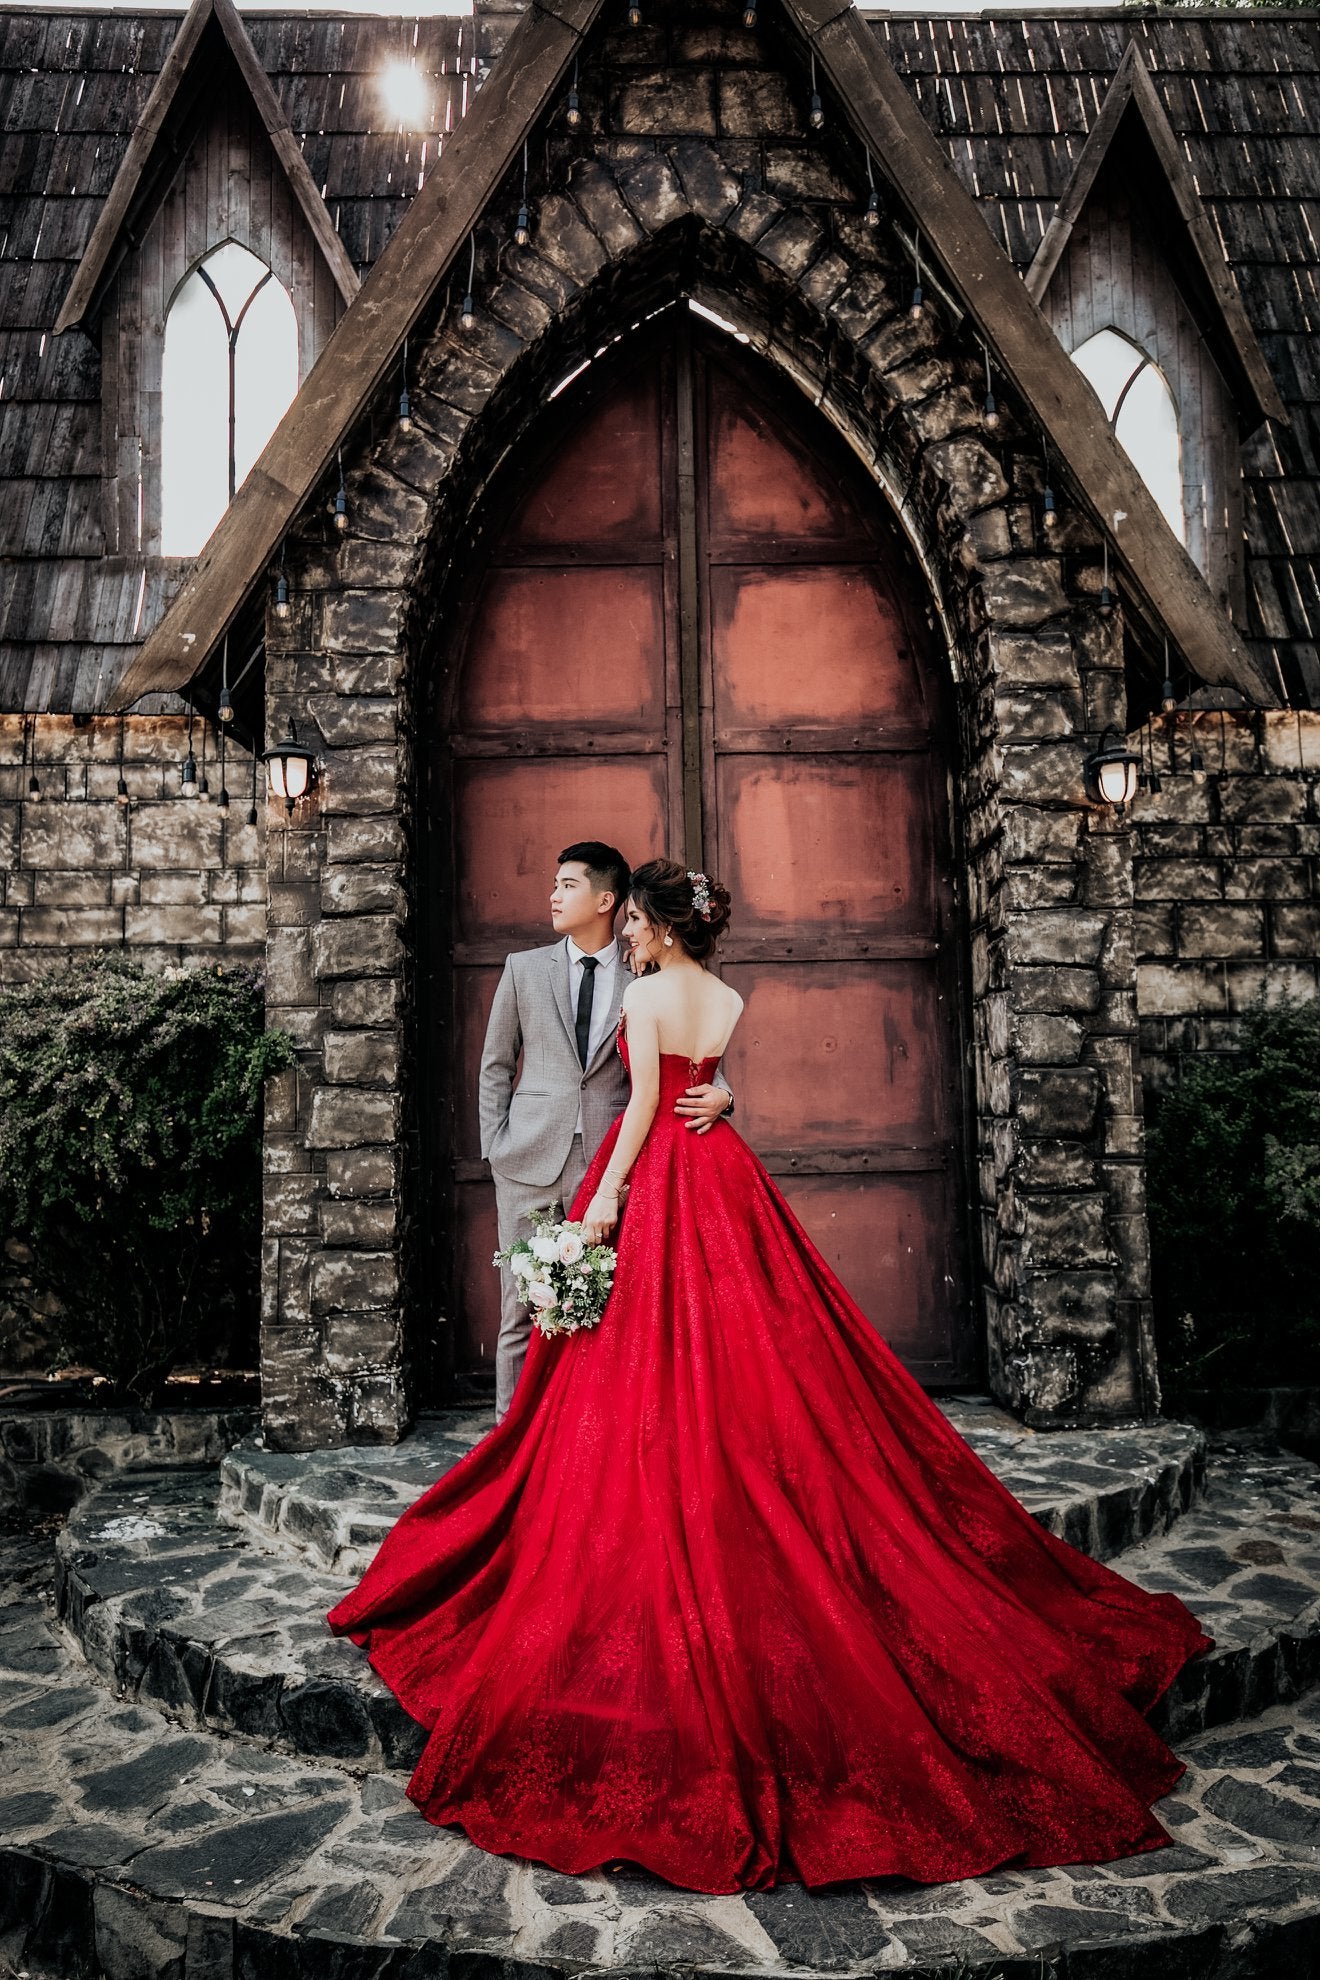 bridal red dress pic